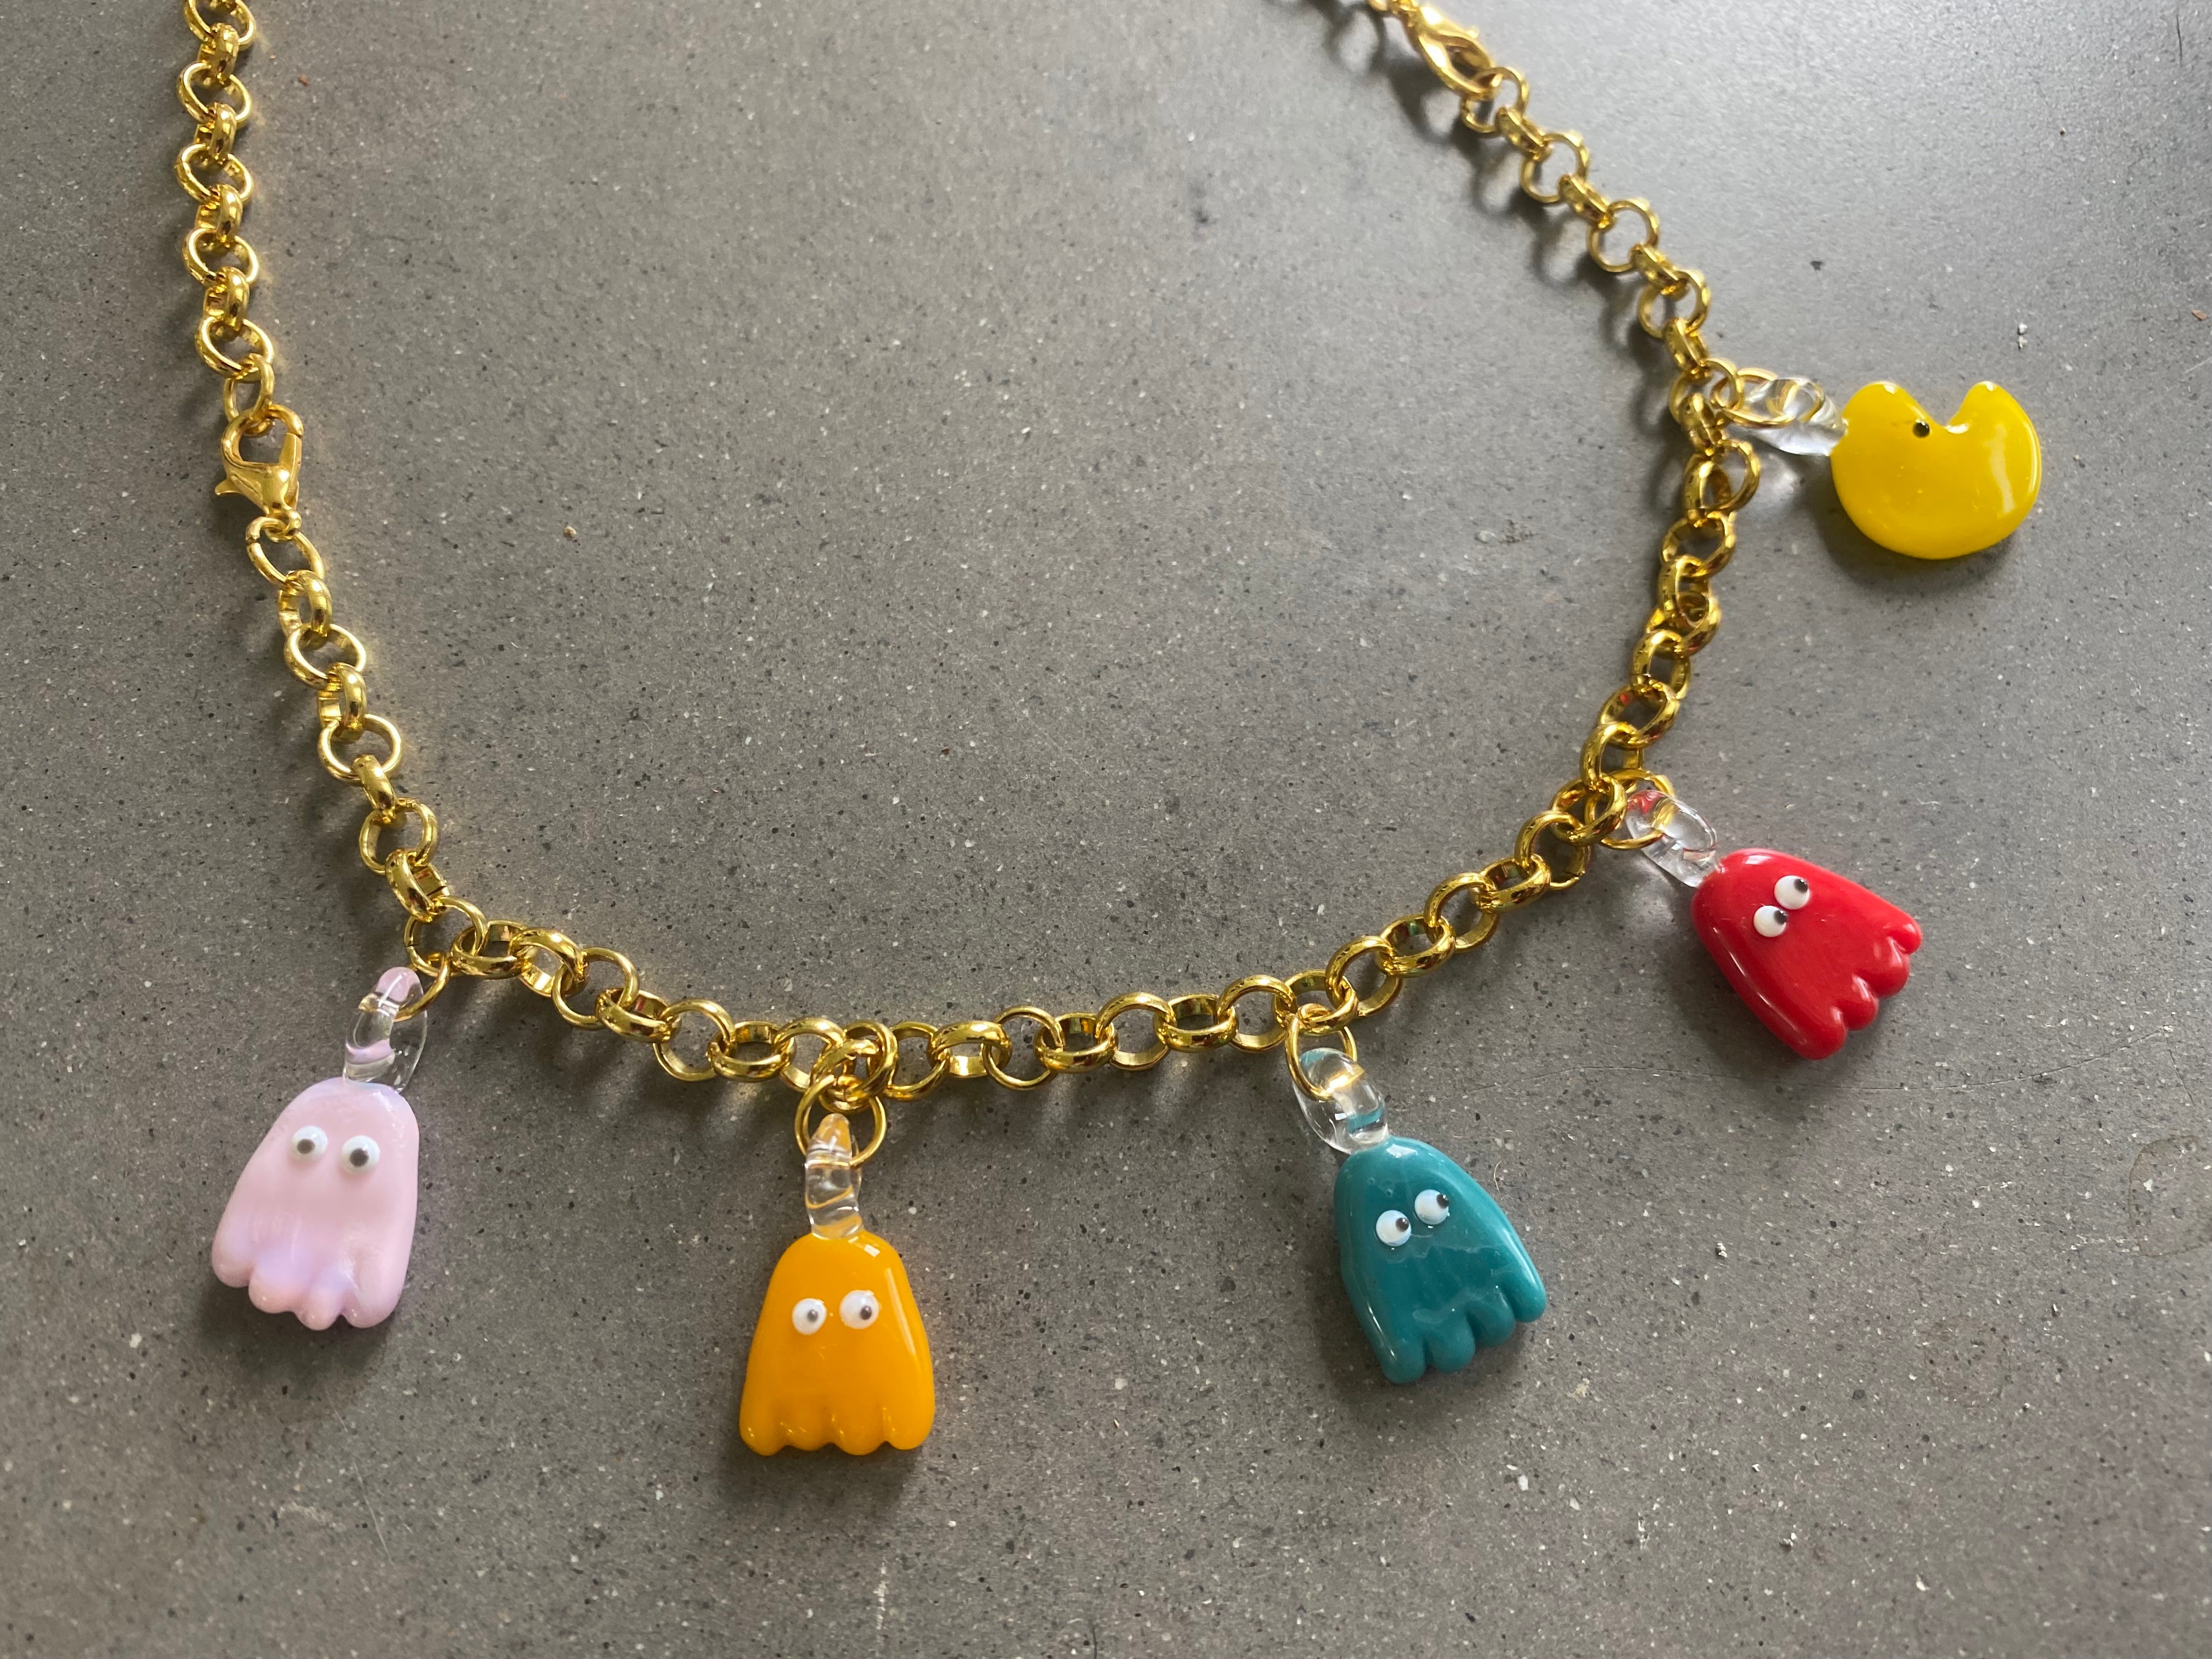 PacMan Charm Necklace and Bracelet